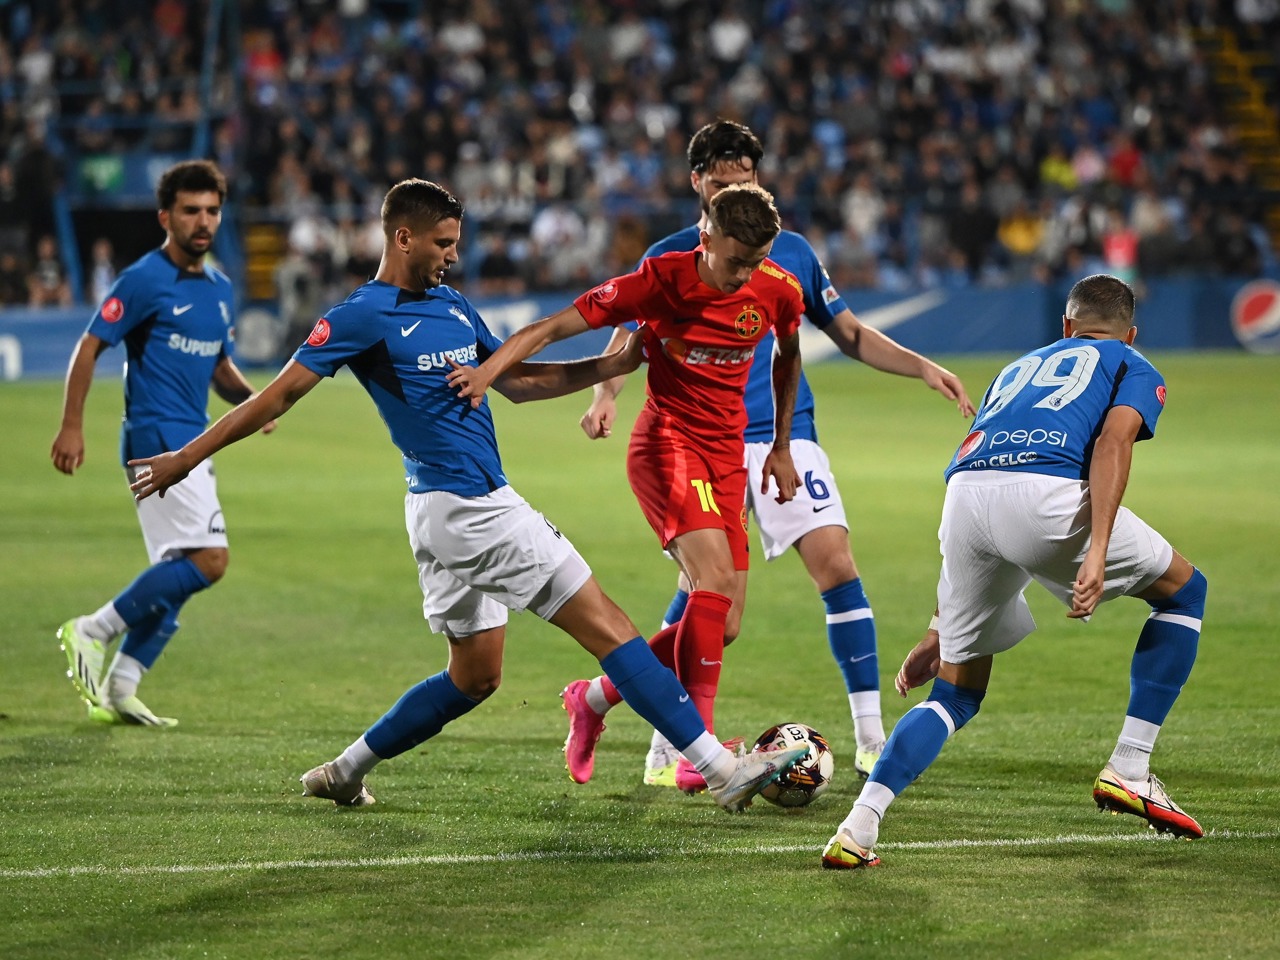 FCSB edge Farul Constanța in controversial penalty decision